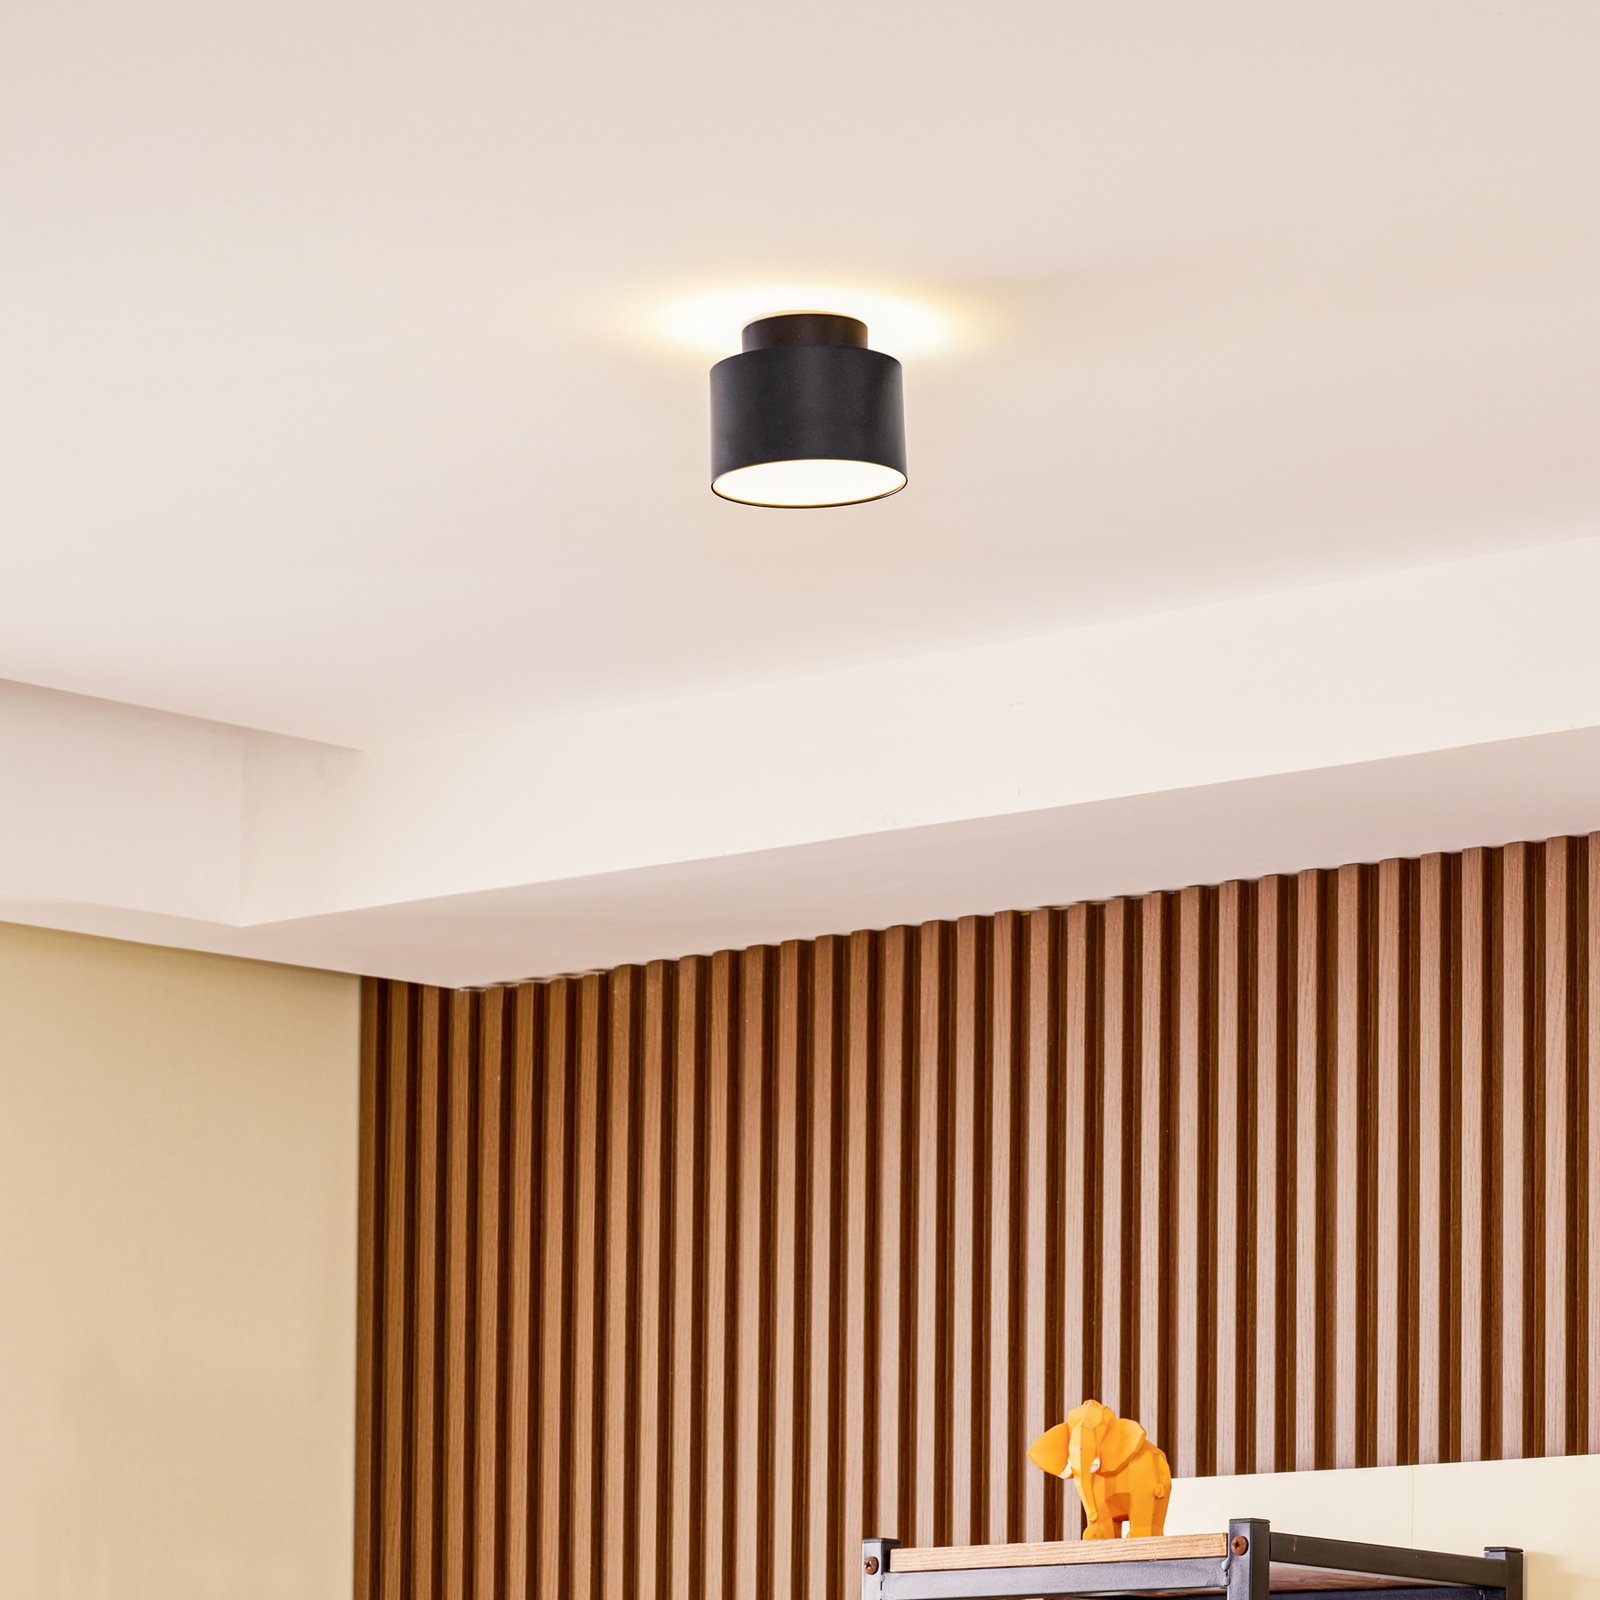 Lindby LED-strålkastare Nivoria, Ø 11 cm, sand svart